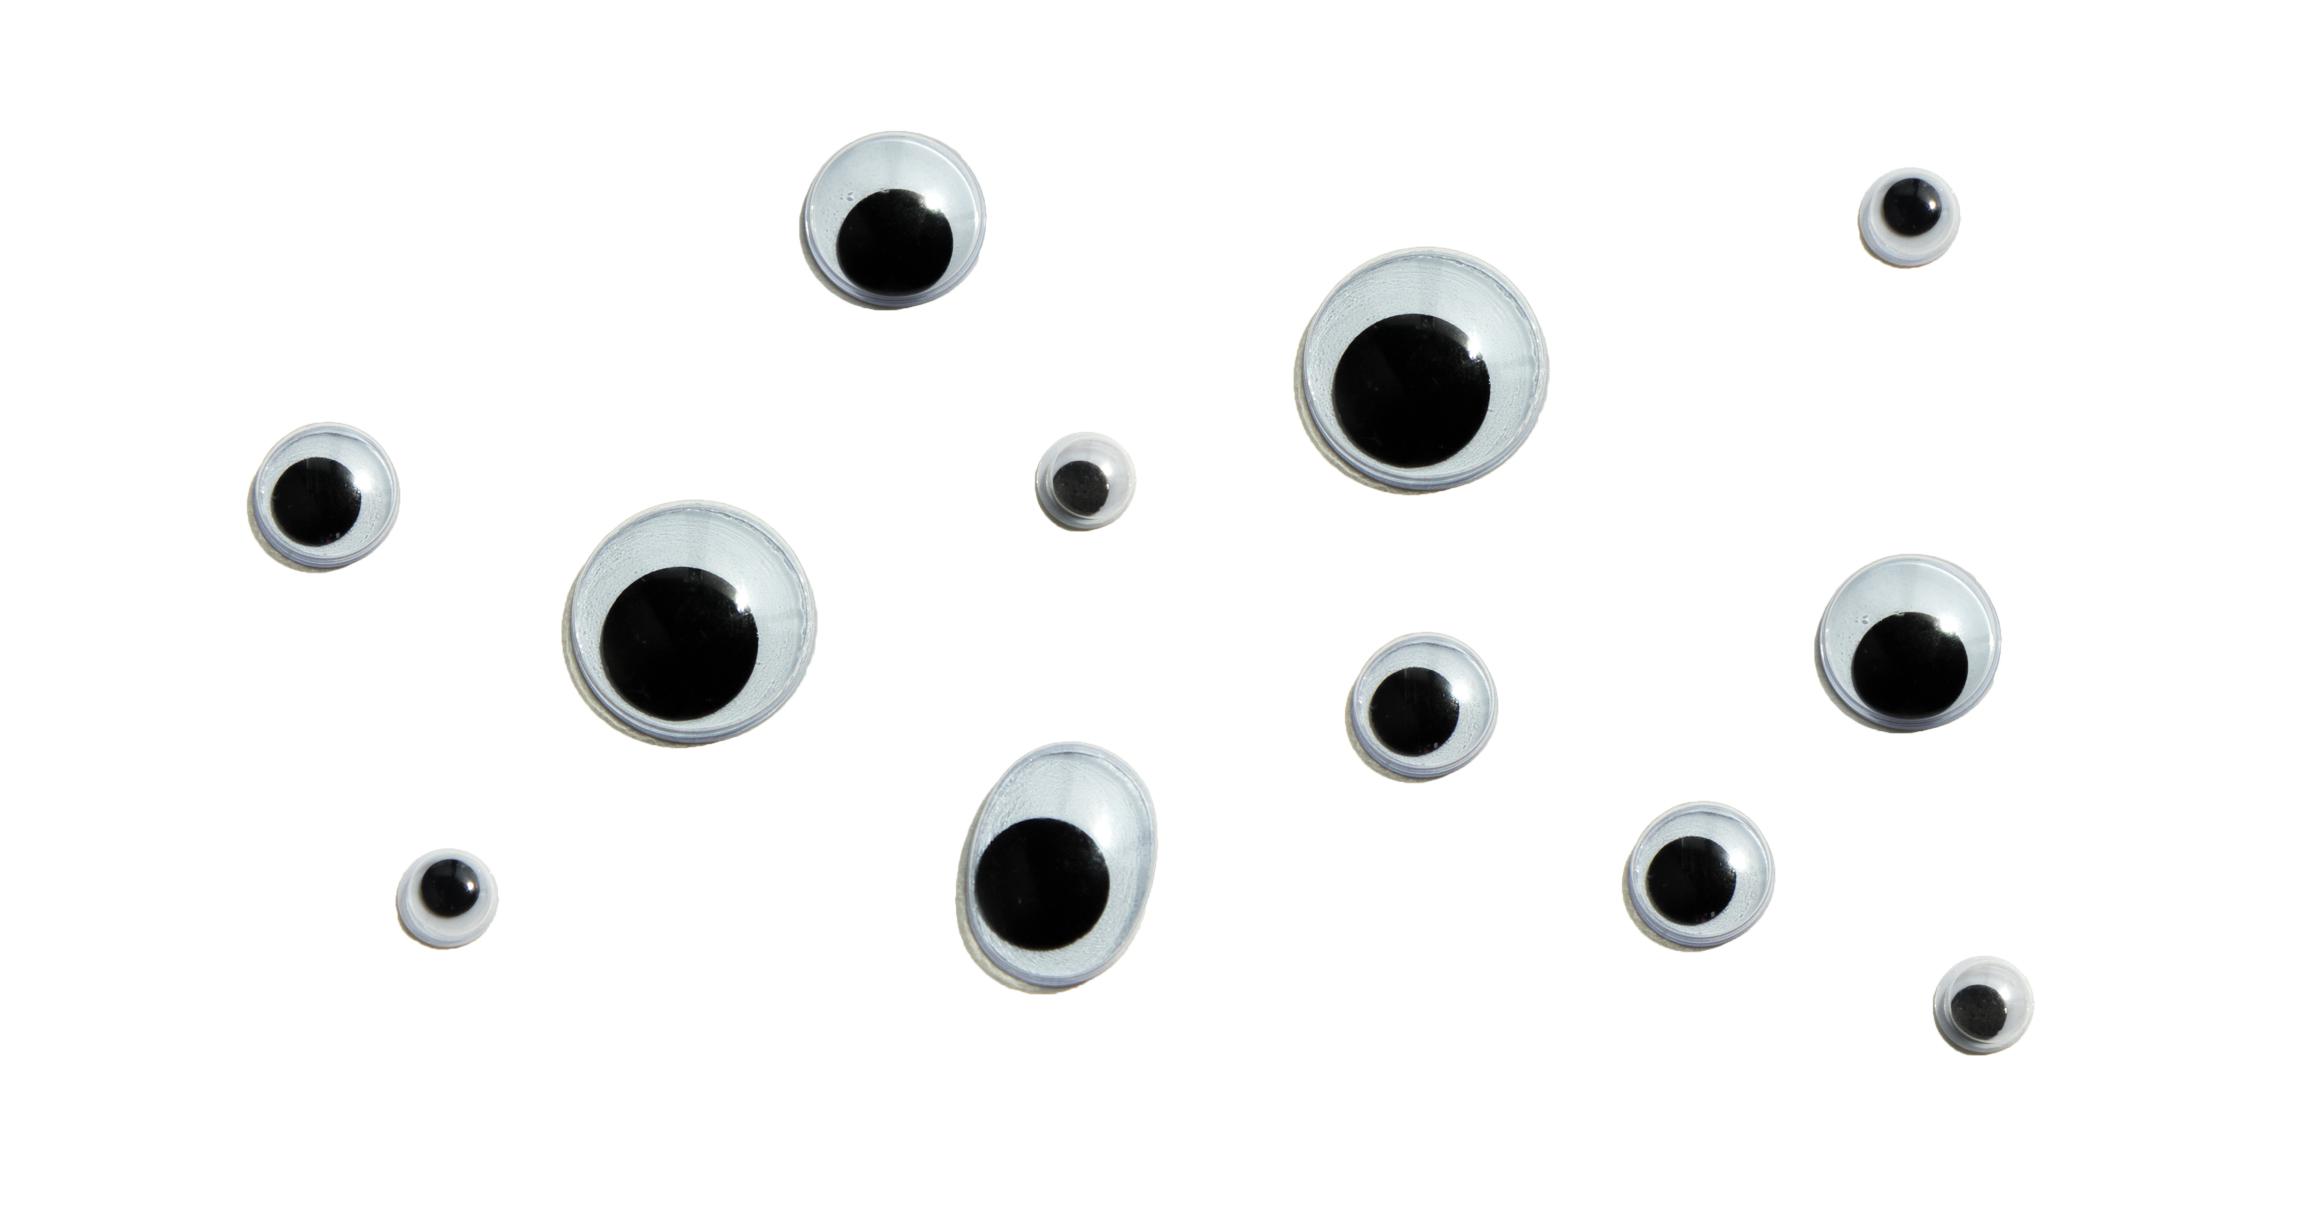 Googly eyes on a white background